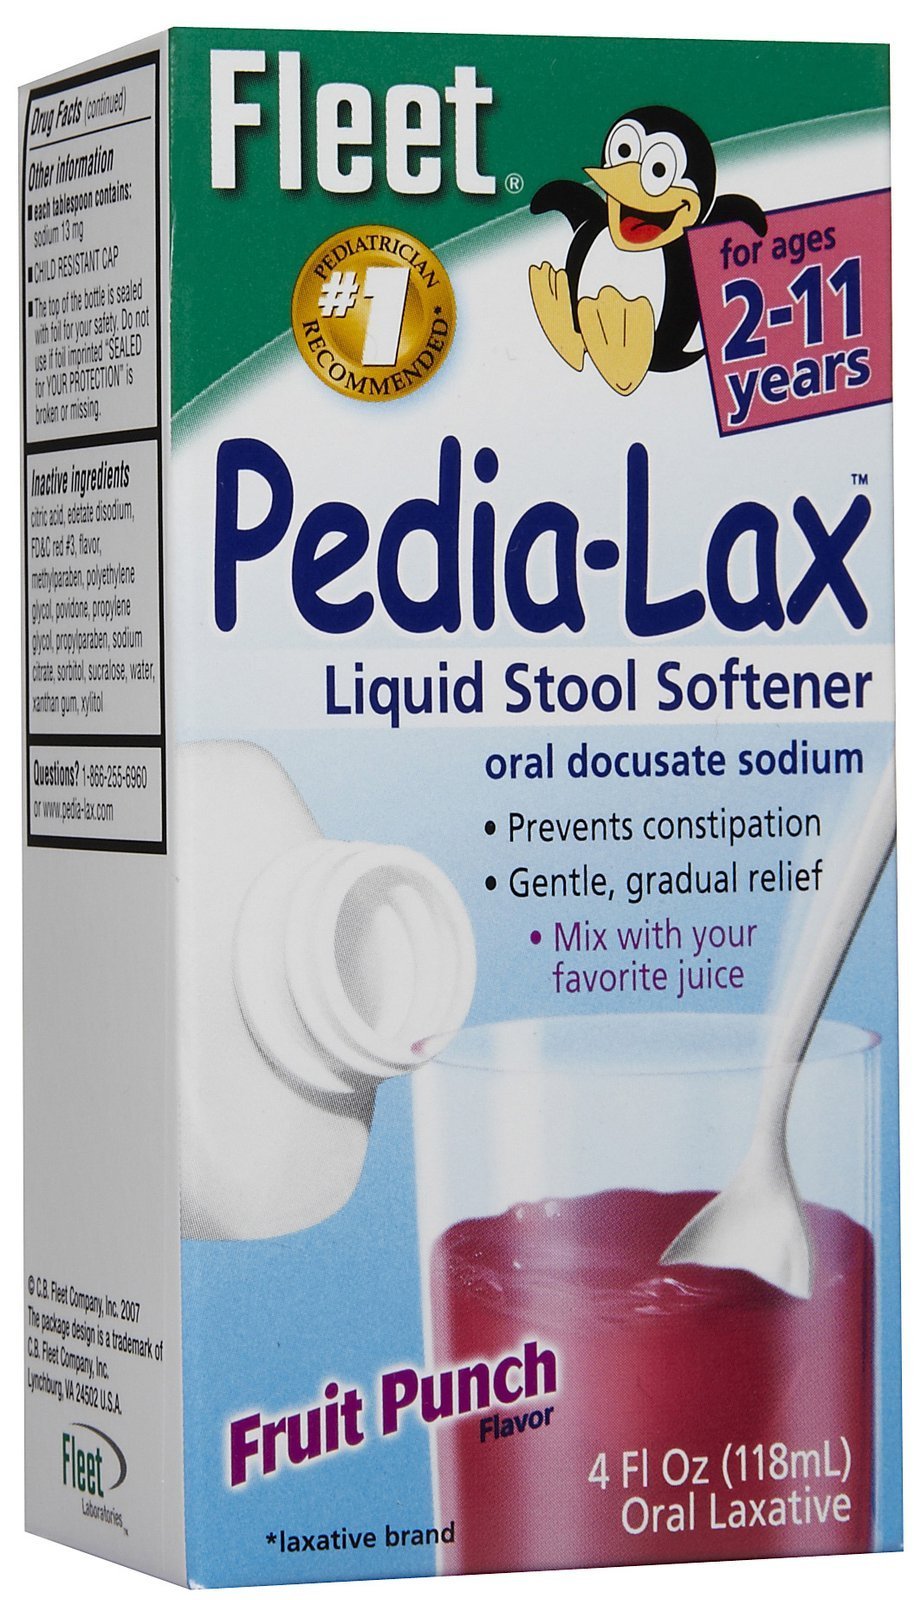 Fleet Pedia Lax Liquid Stool Softener, Fruit Punch, 4 oz